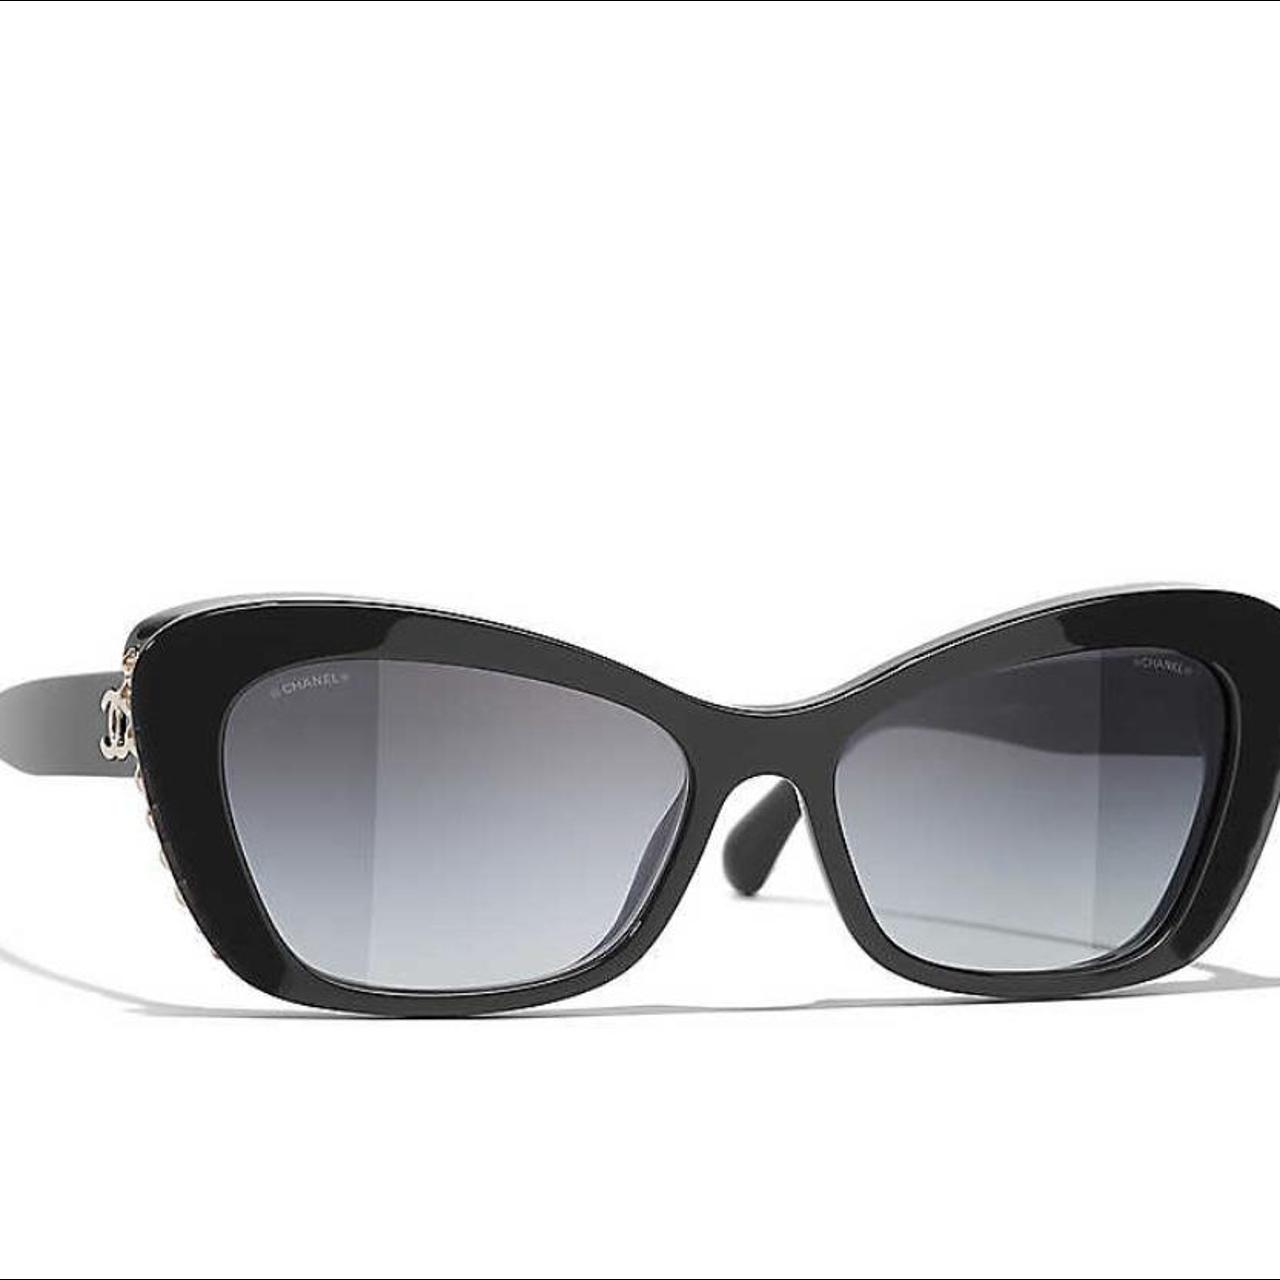 Chanel Women's Sunglasses - Black